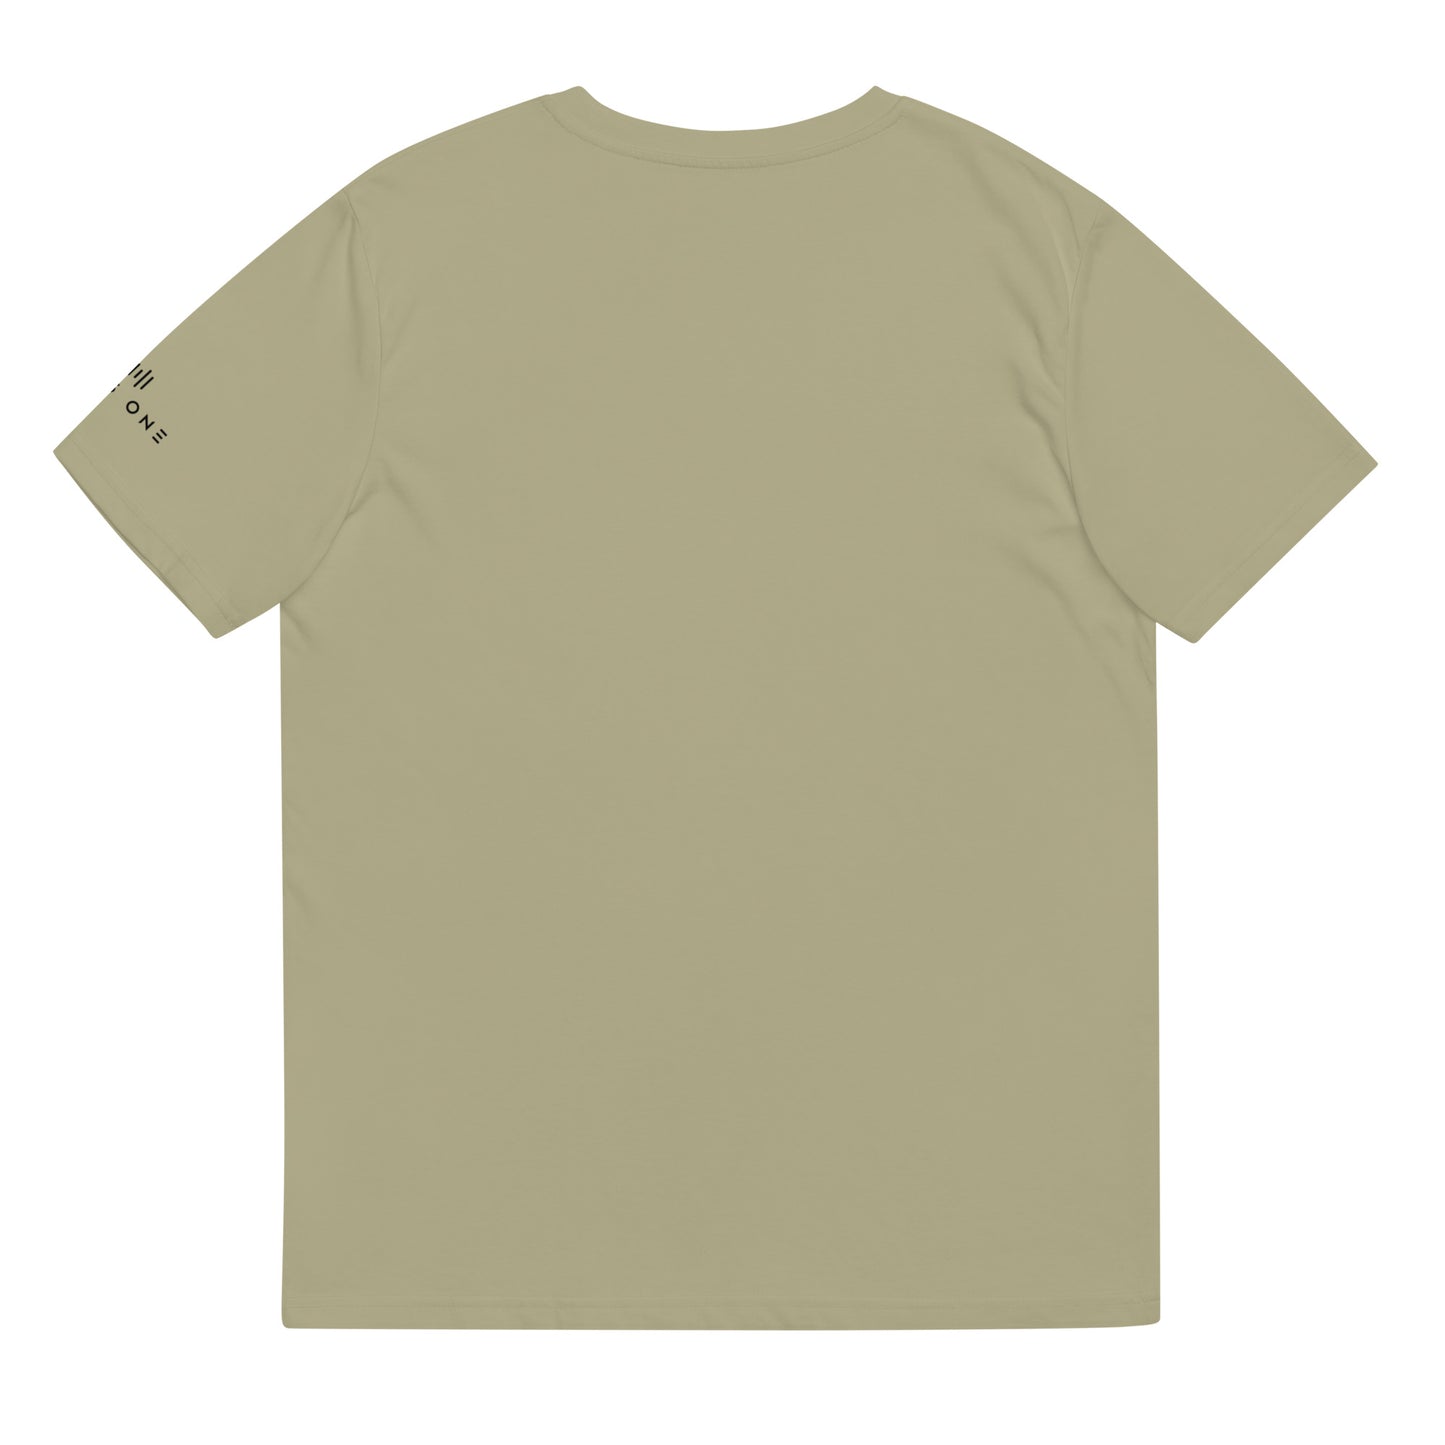 NFTM (v2) Unisex organic cotton t-shirt (Black Text)